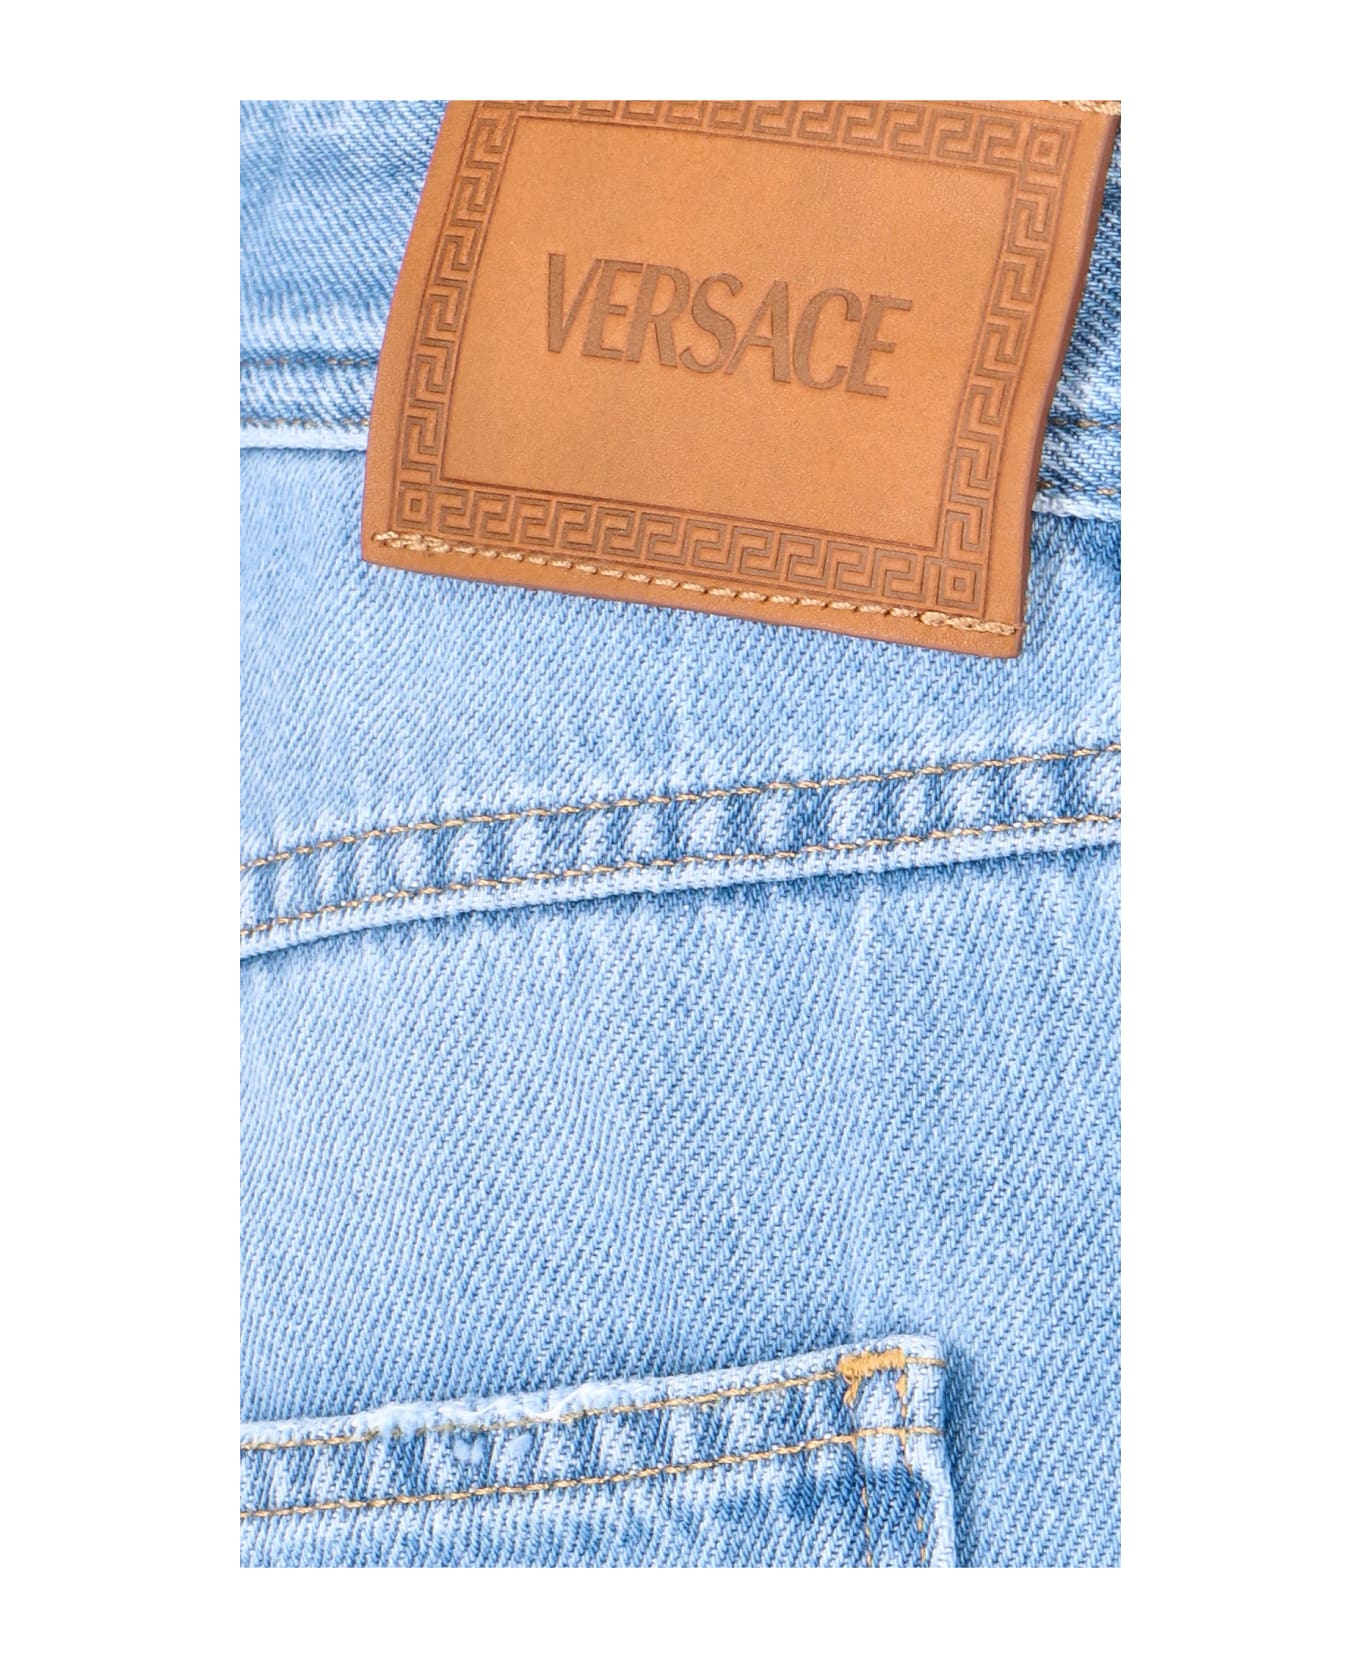 Versace Jeans - Light over